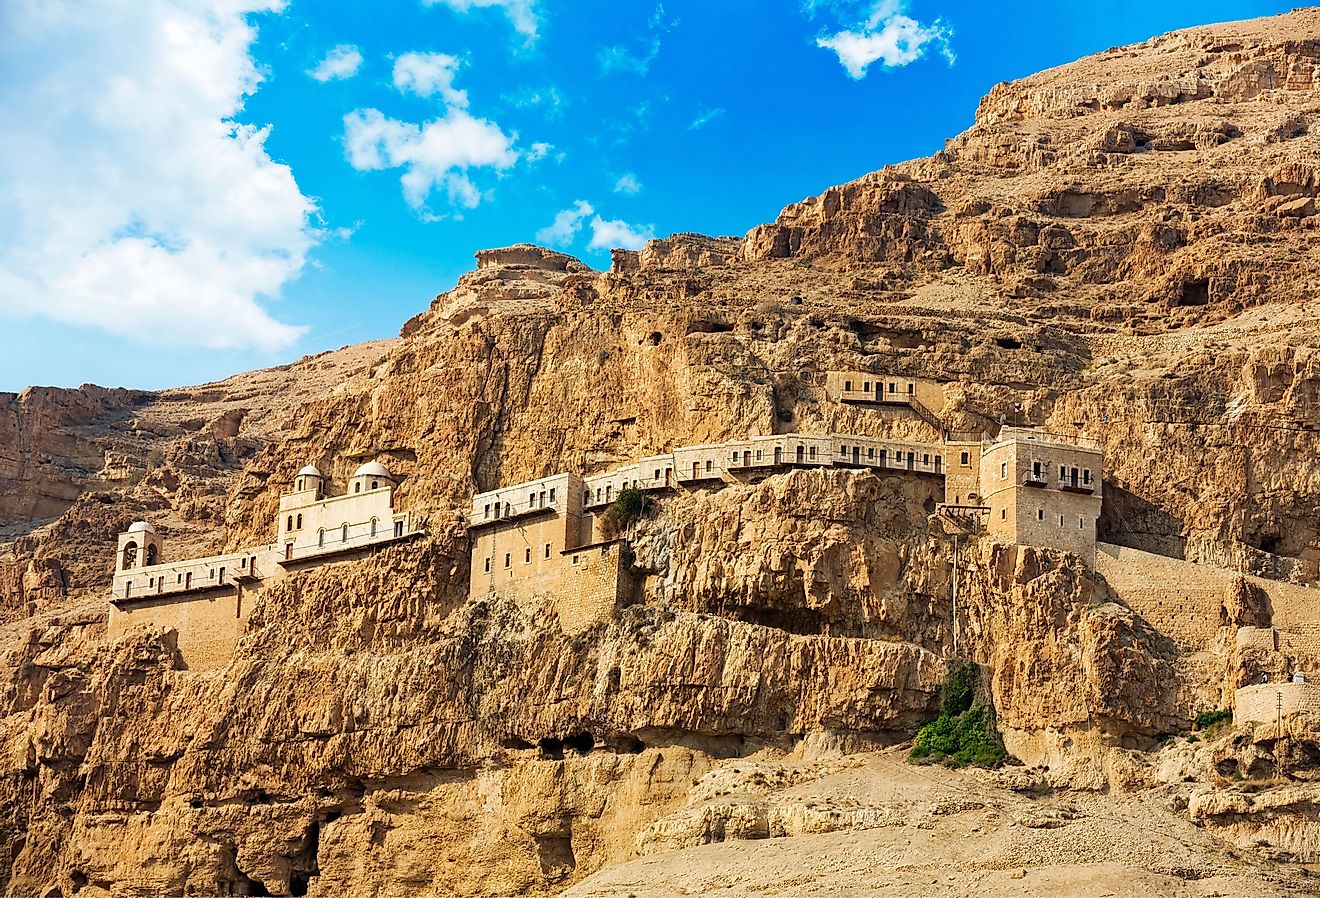 Mount of Temptation, Jericho, Palestine. Image credit posztos via Shutterstock